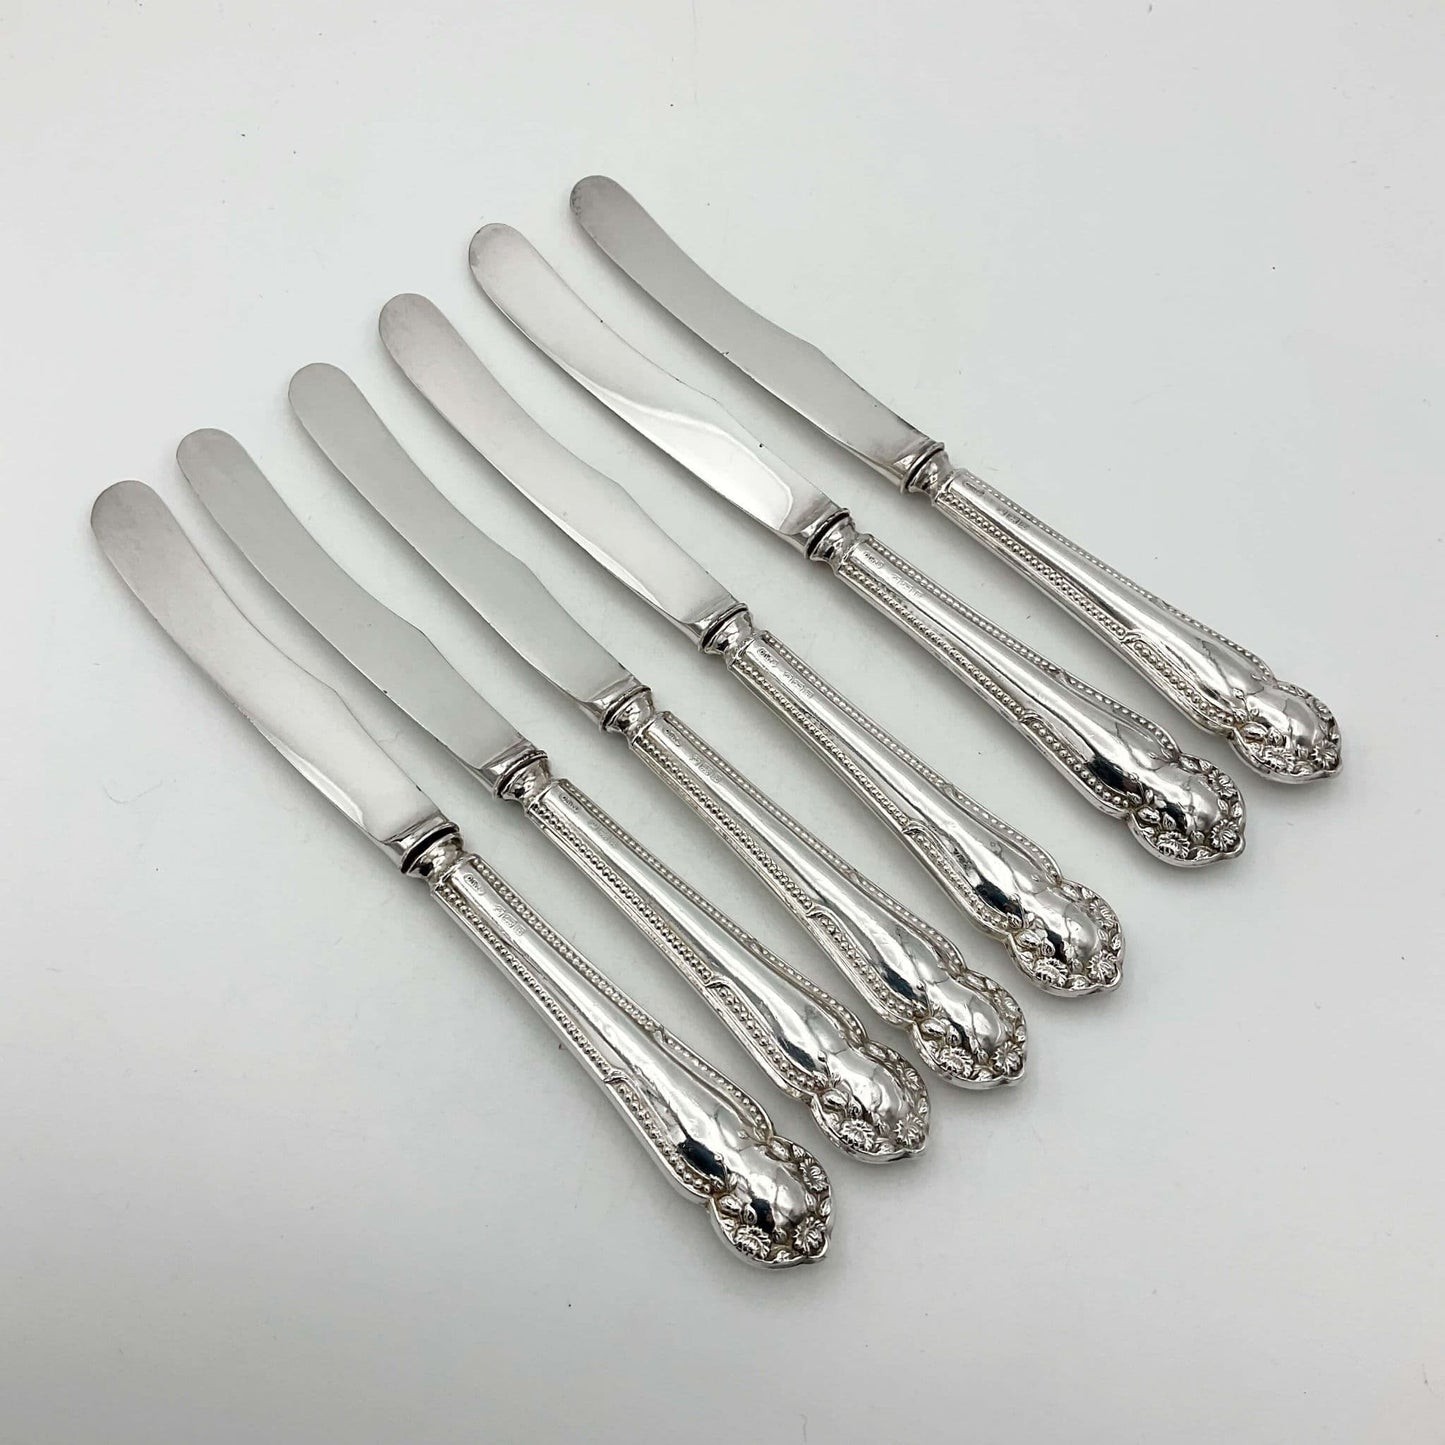  Six antique silver tea knives on a plain background